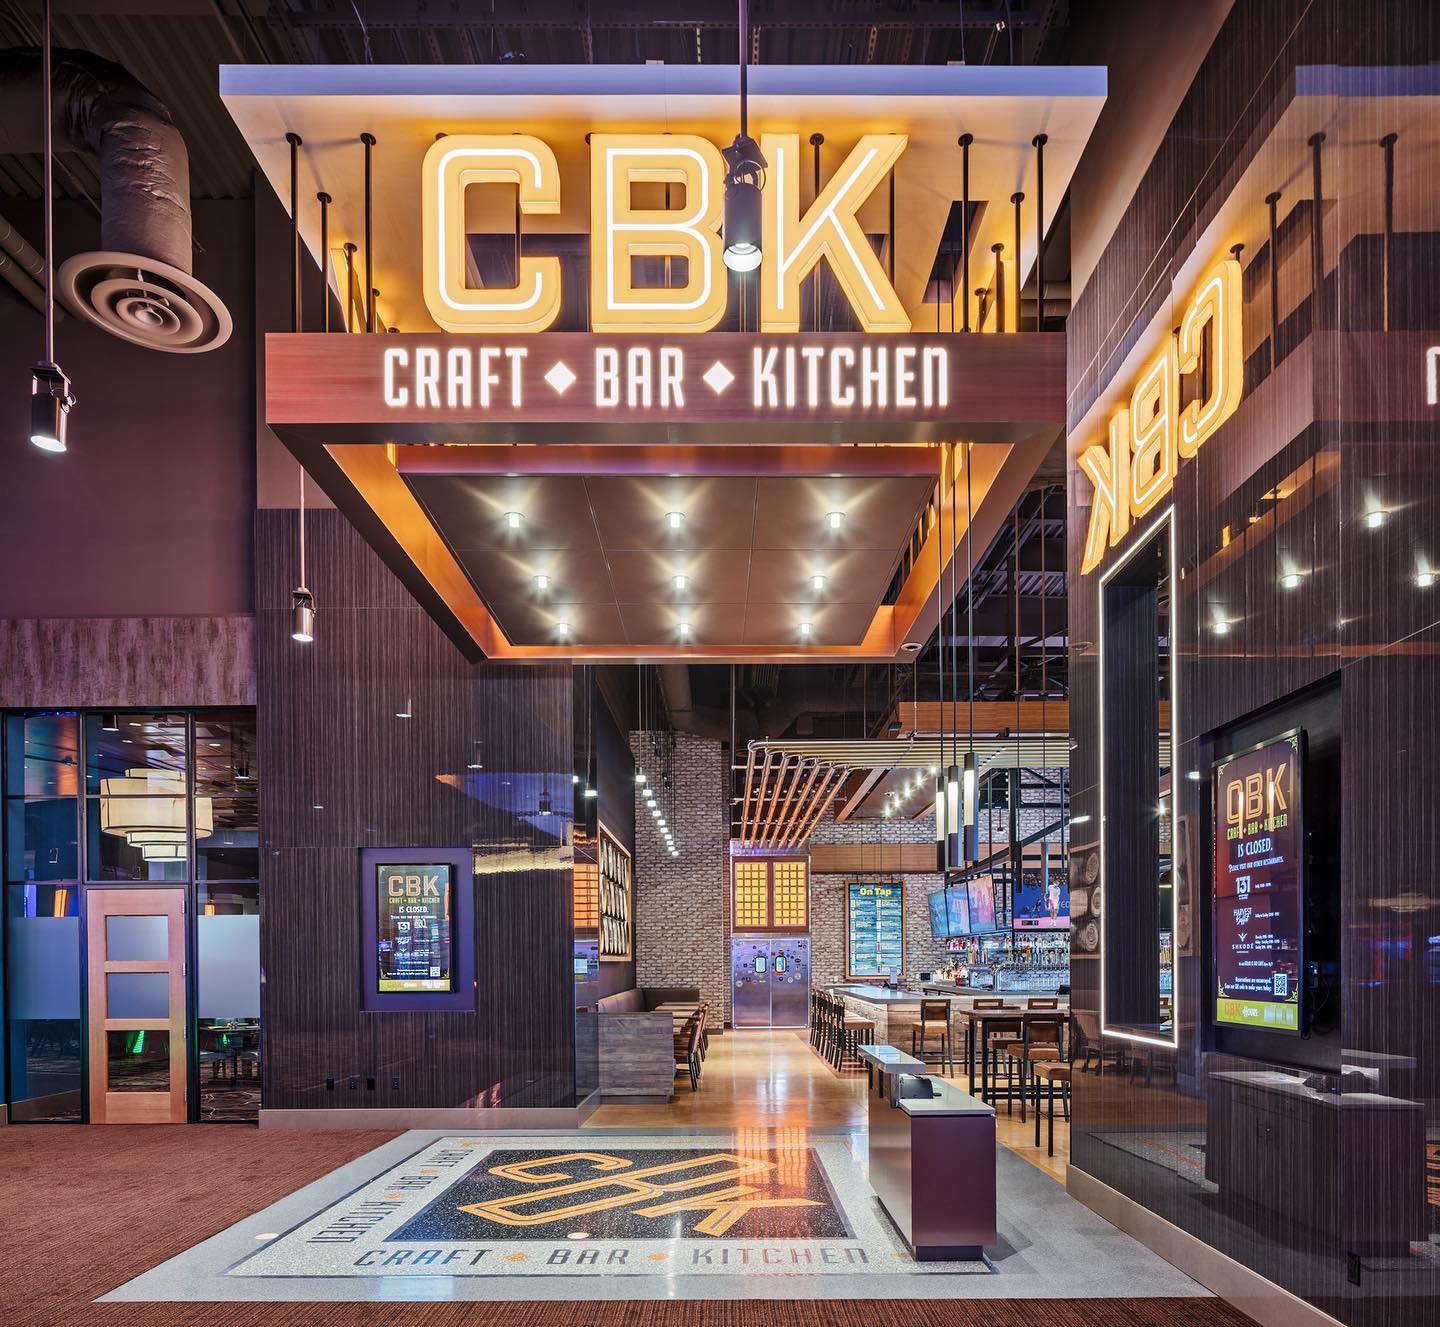 CBK // Craft Beer Kitchen
Gun Lake Casino
@jcjarchitecture 
#michigancasinos #jcjarchitecture #ckpstudio #gunlakemichigan #hospitality #architecture #design